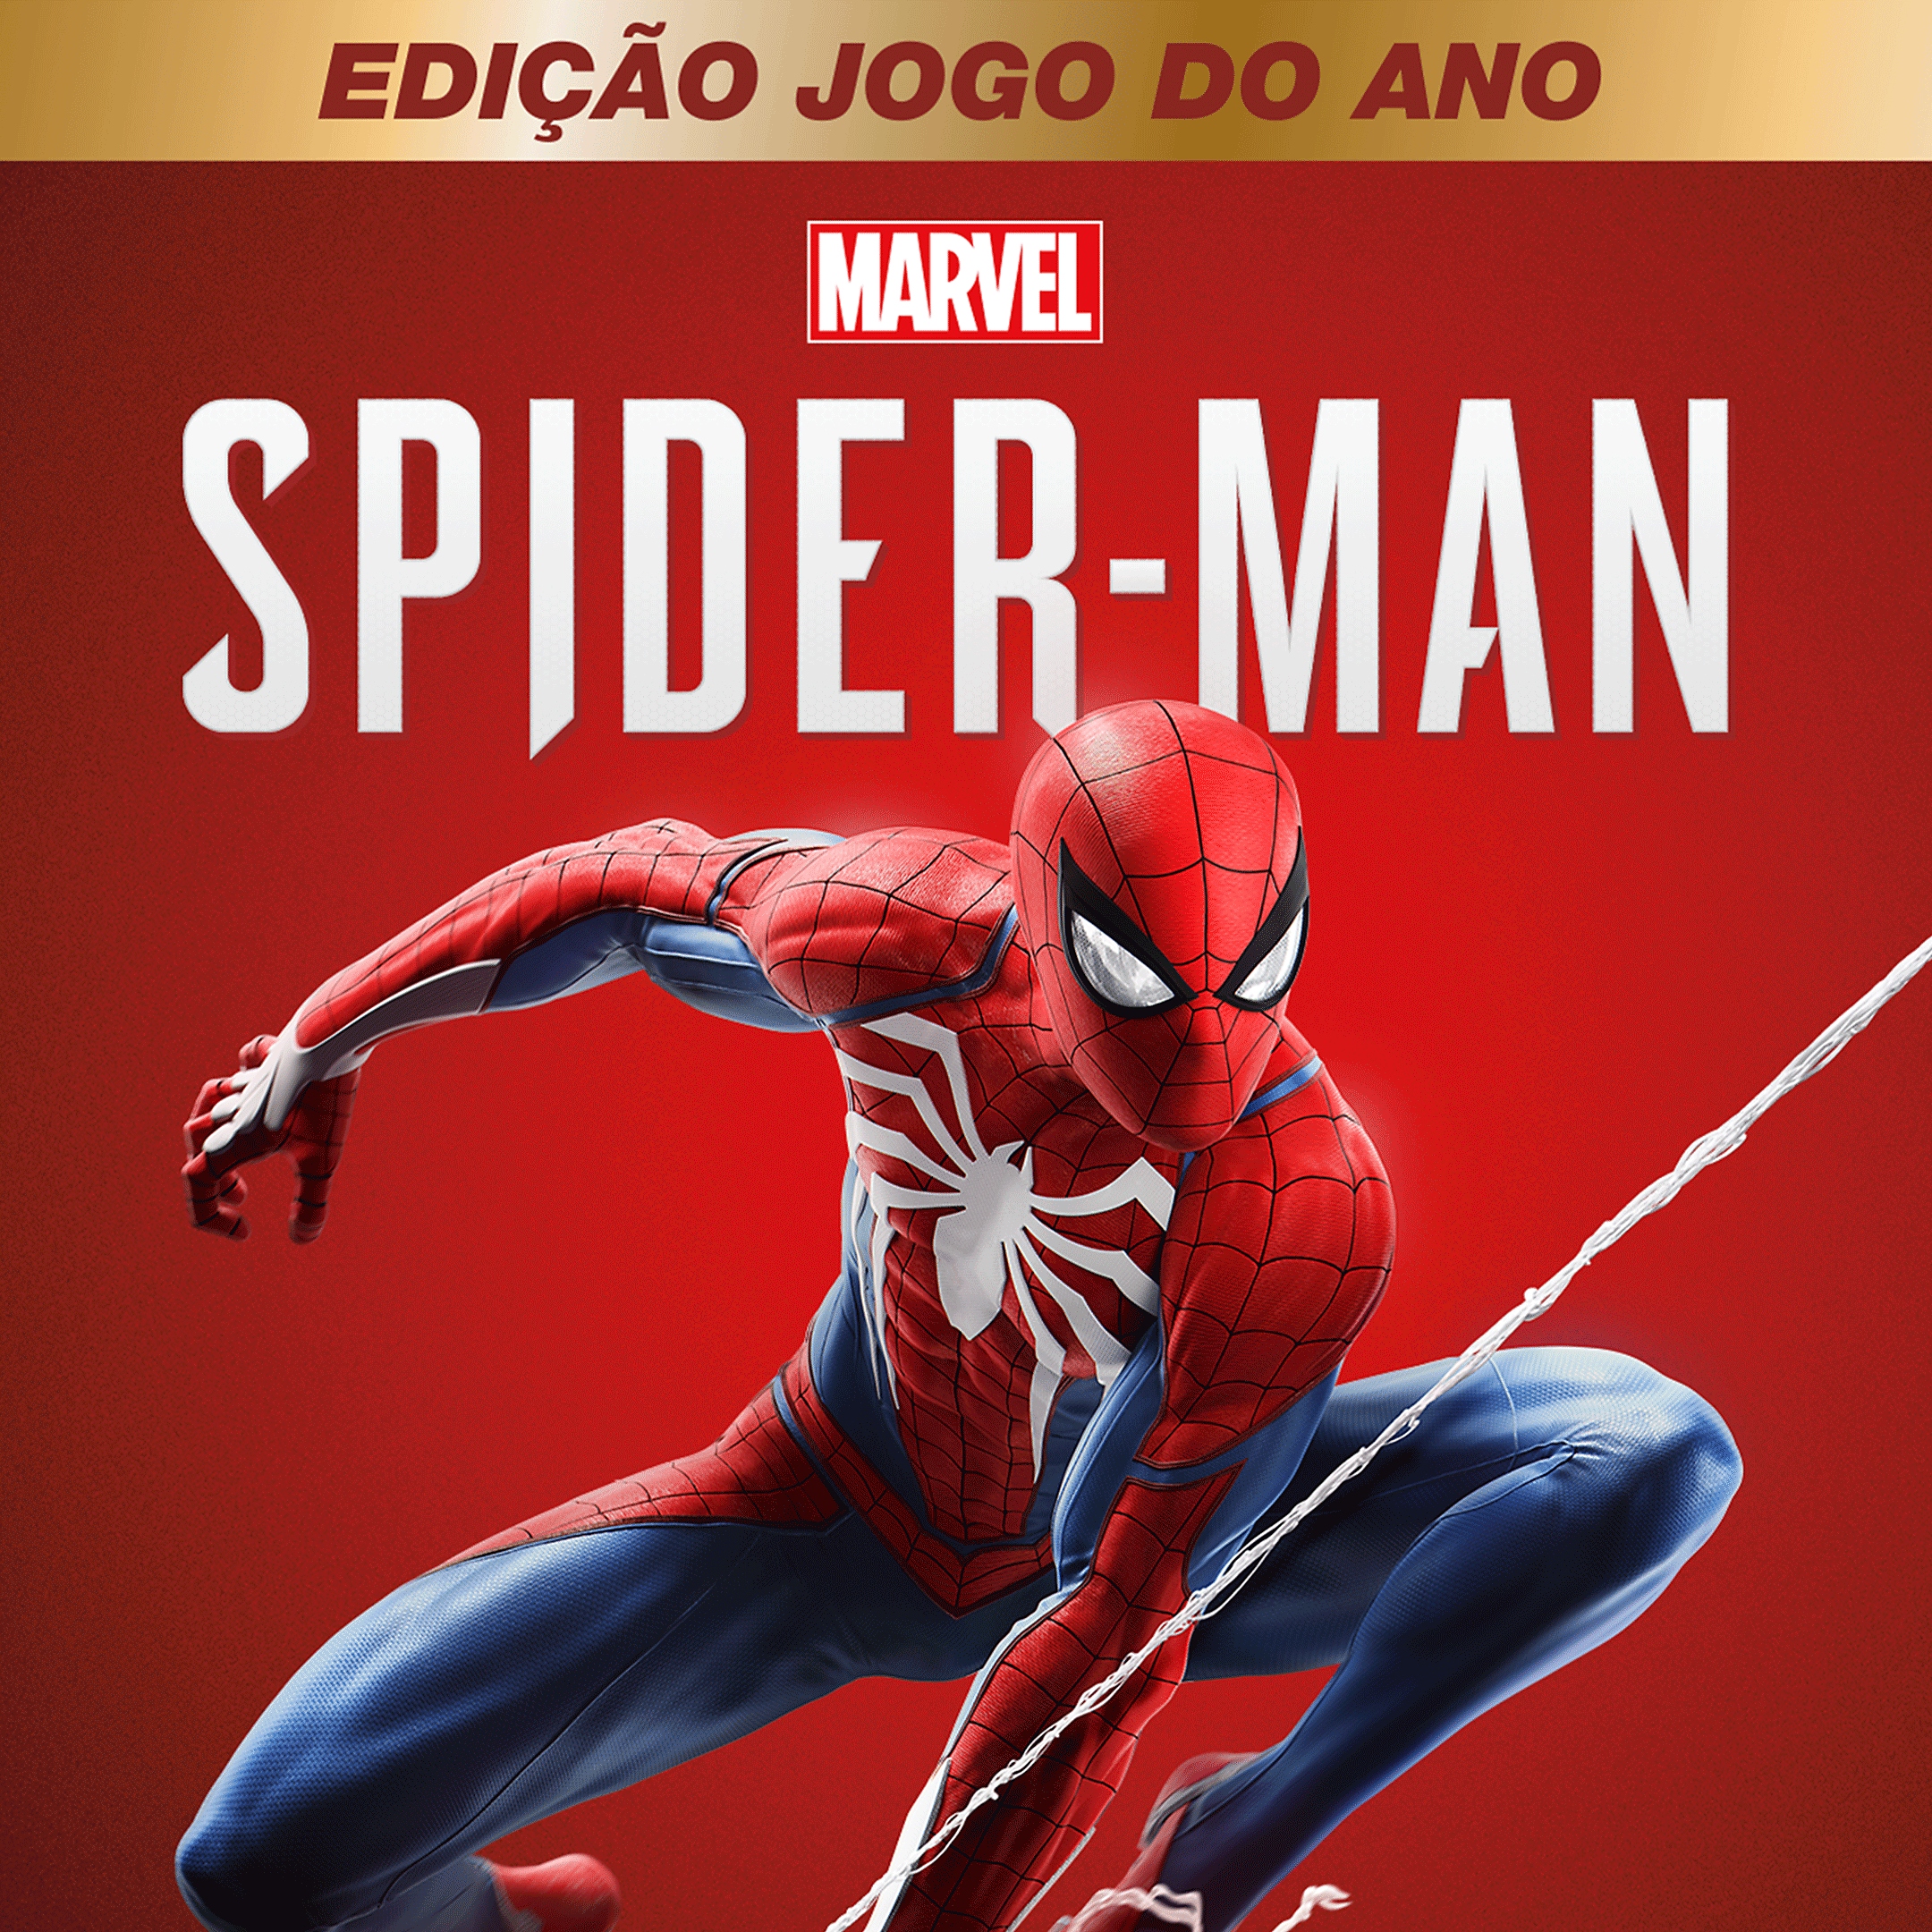 Semana do Consumidor PlayStation Marvels Spider Man Jogo do Ano PS4 Promocao Oferta